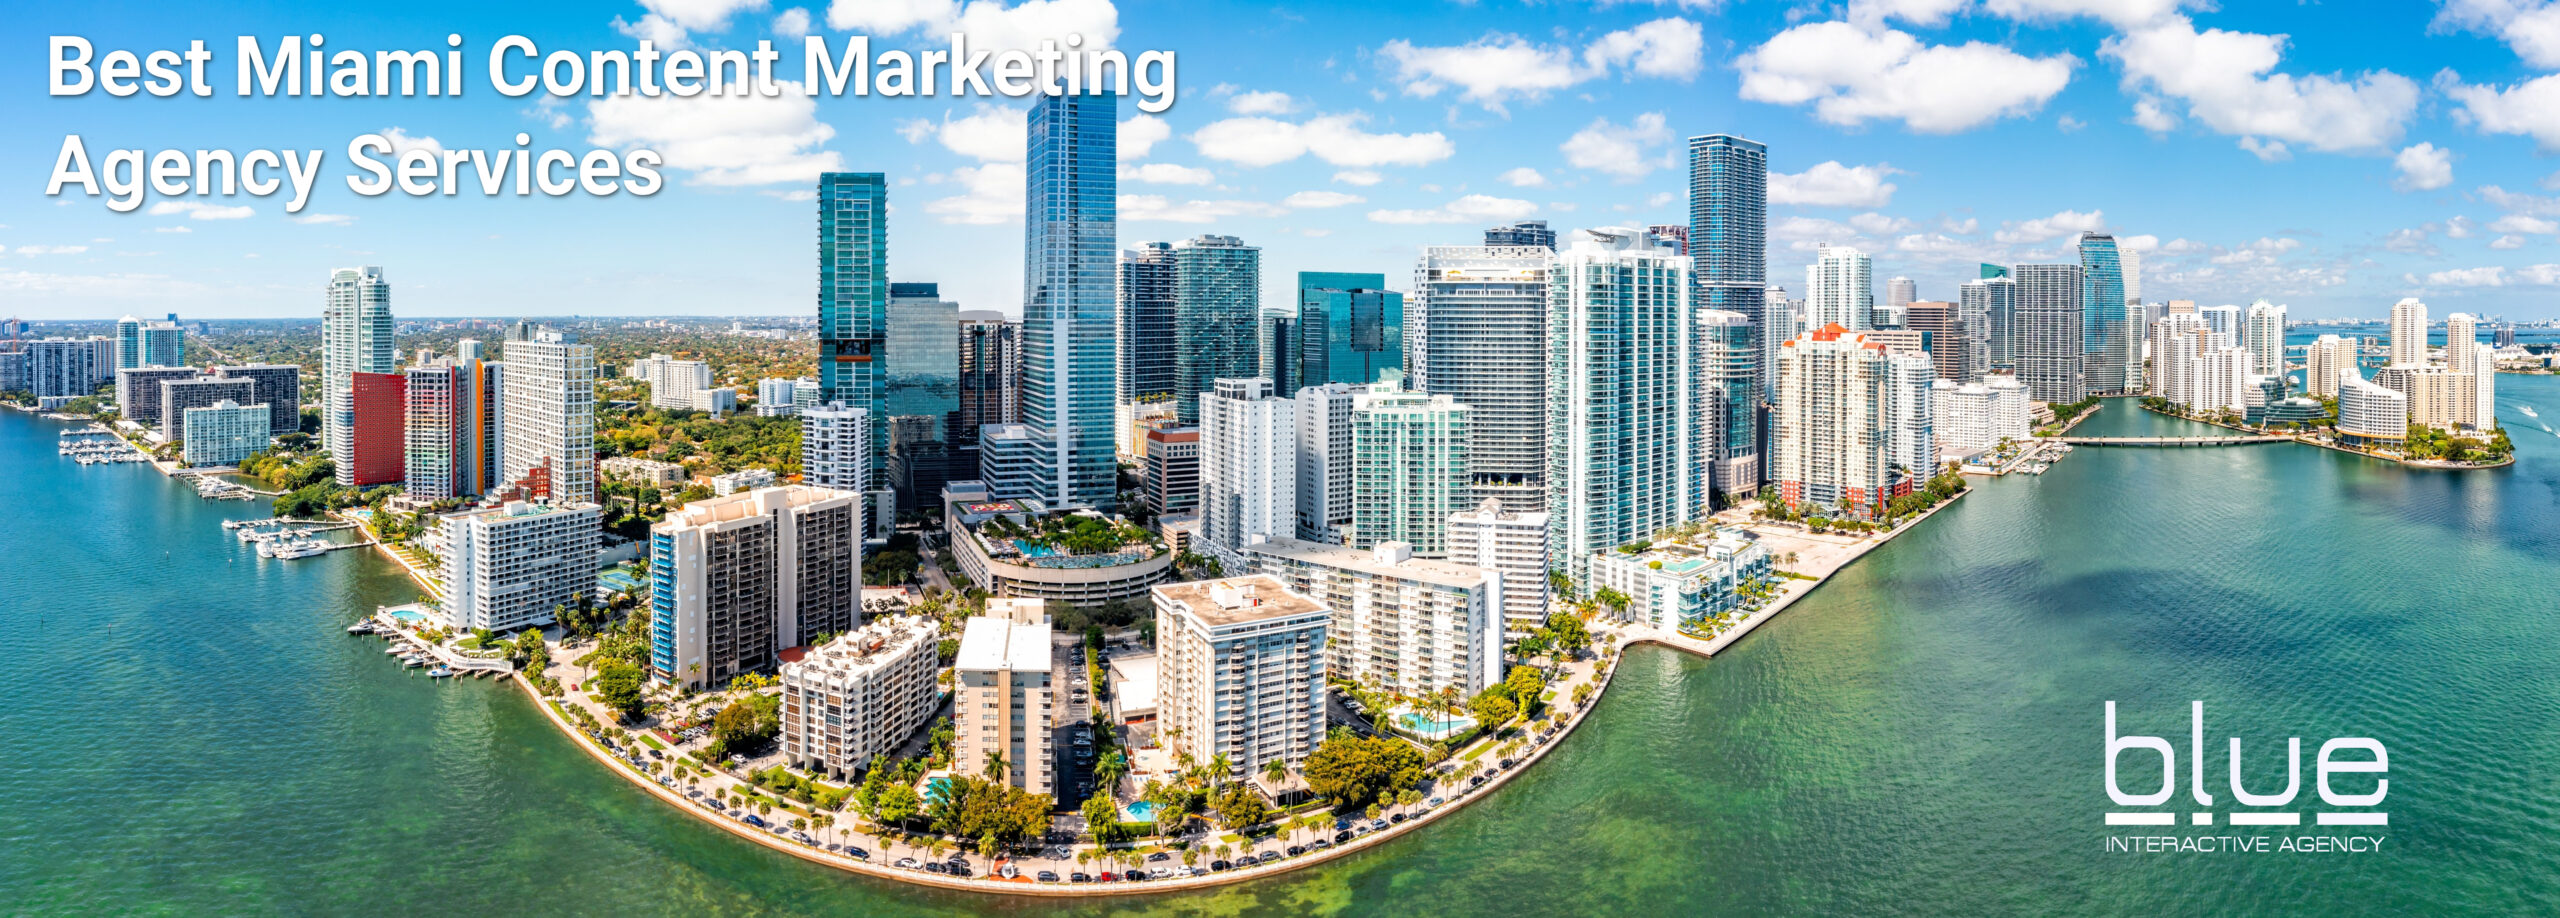 Miami Content Marketing Agency Services